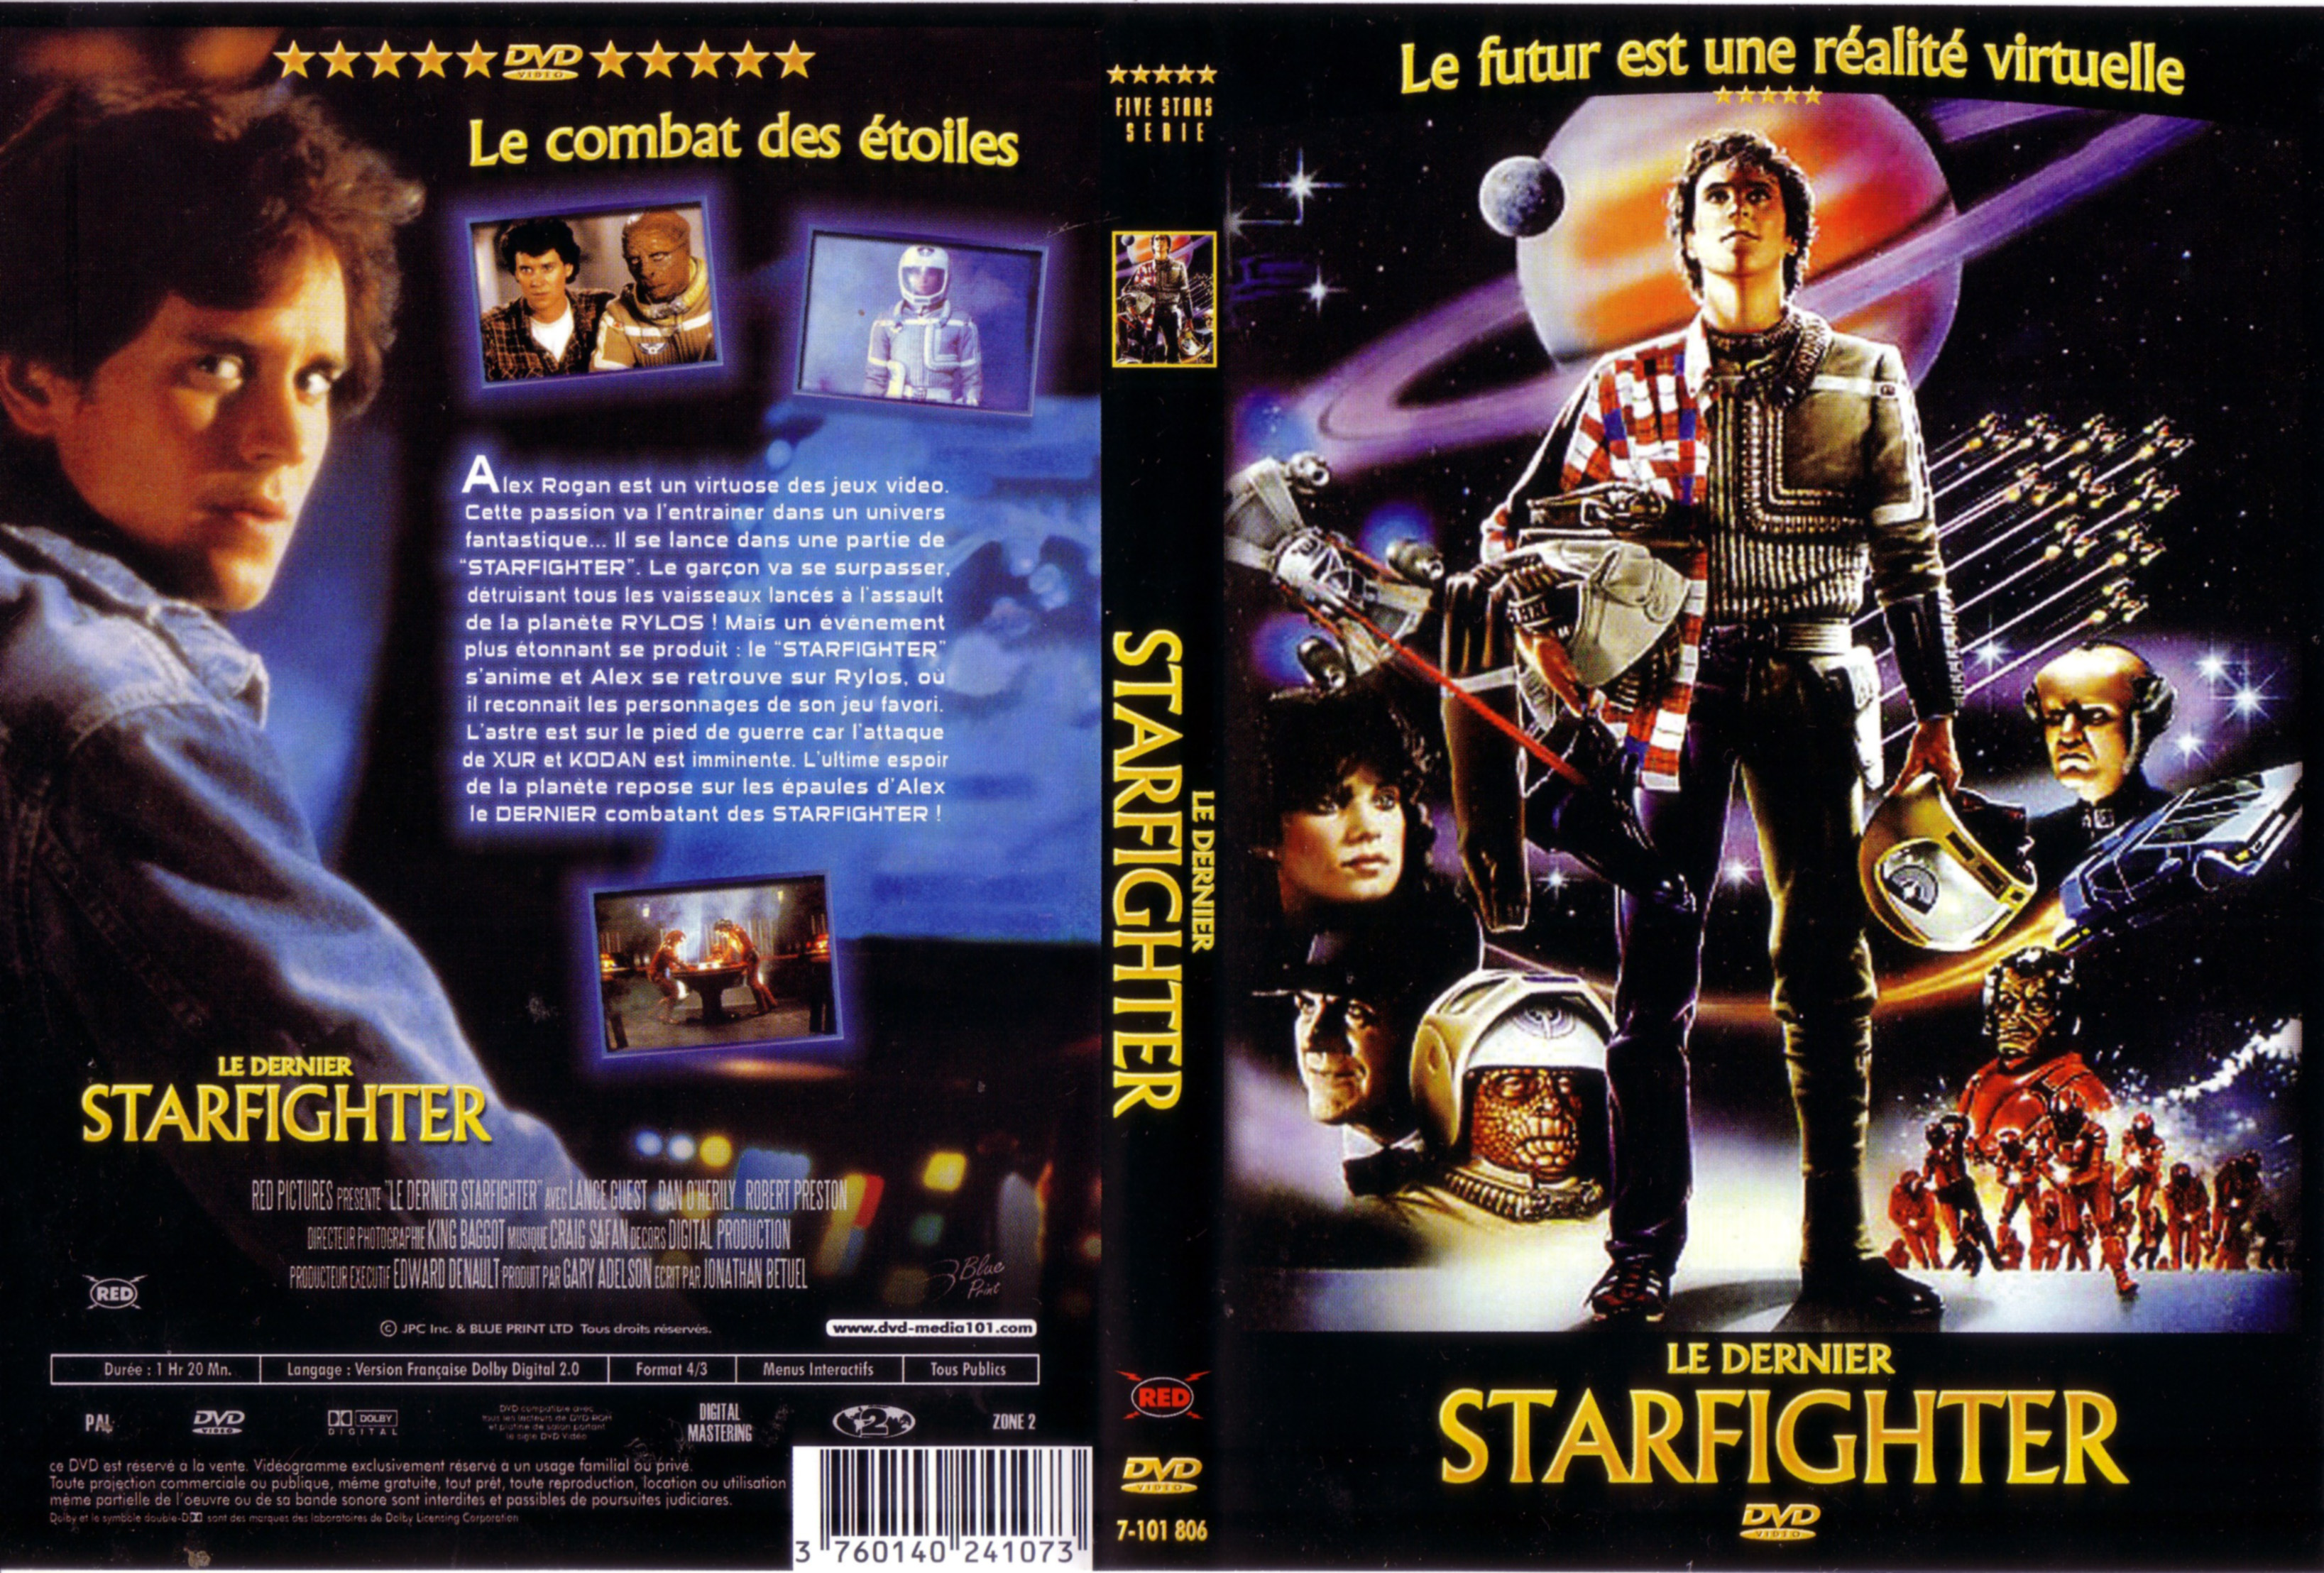 Jaquette DVD Le dernier starfighter